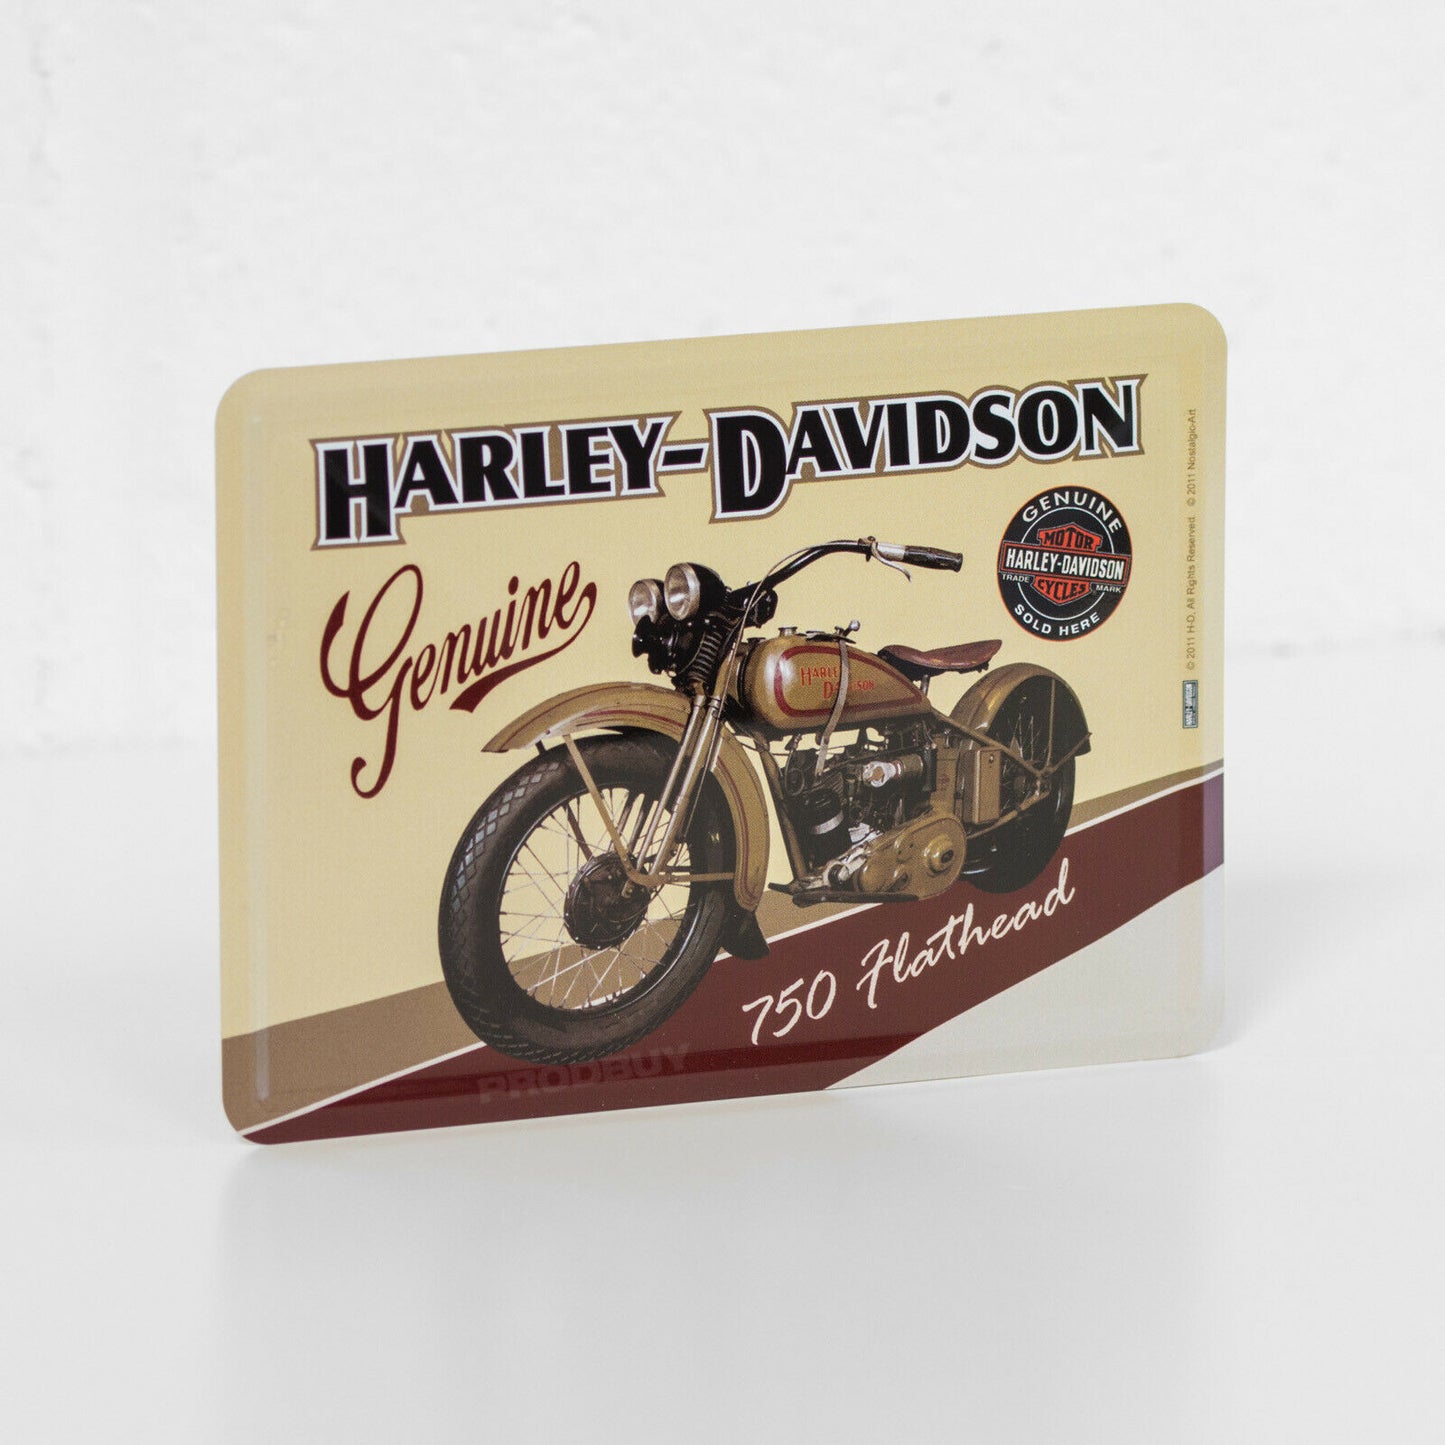 Small Harley-Davidson '750 Flathead' Metal Wall Sign